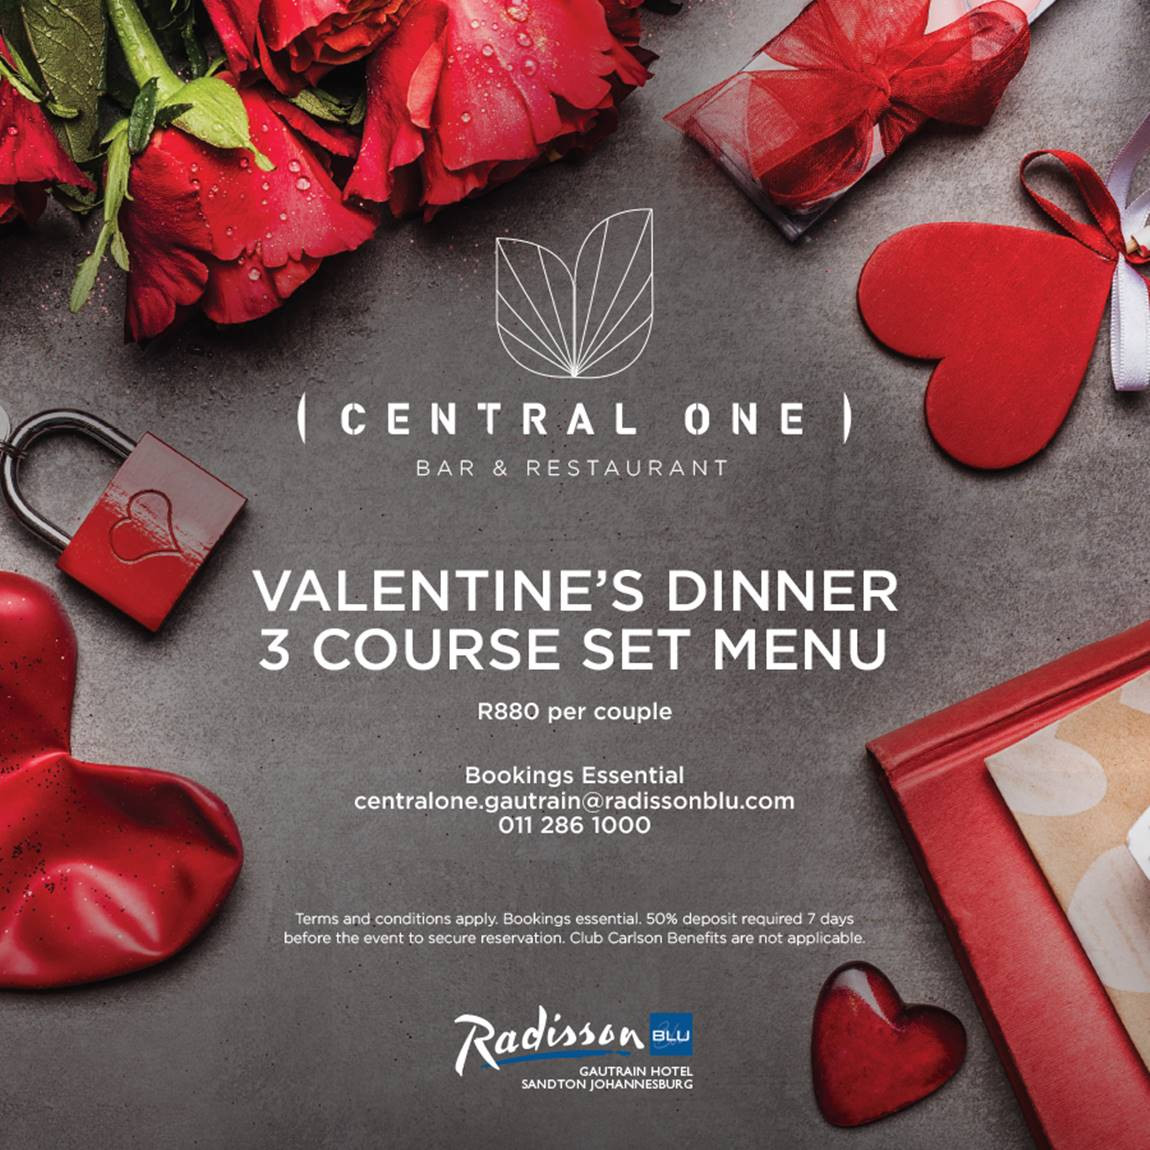 Valentines Day Dinner Restaurant
 Valentines Day Dinner at Central e Restaurant